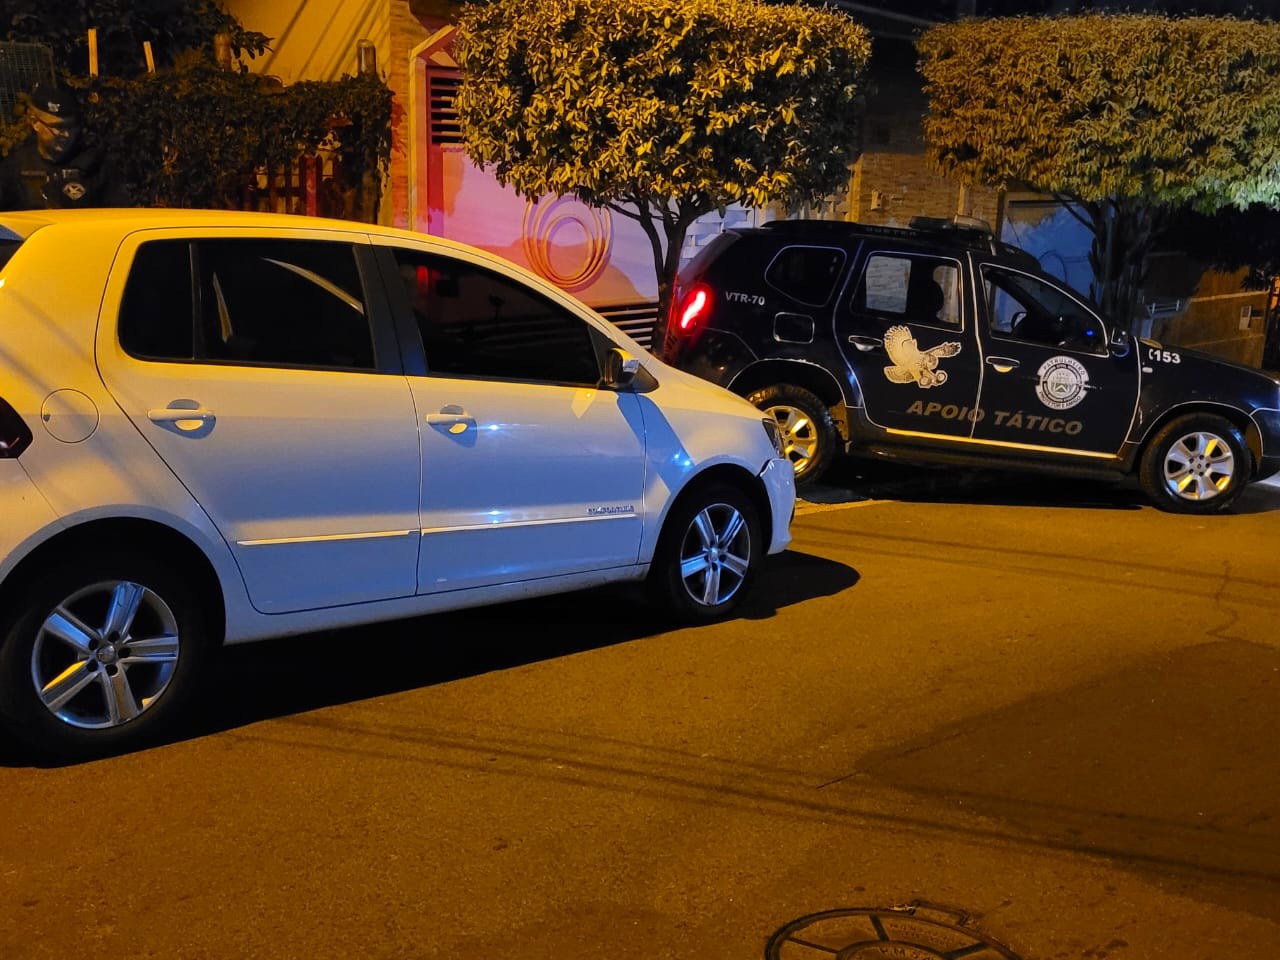 Apoio Tático localiza carro furtado 20 minutos após o crime